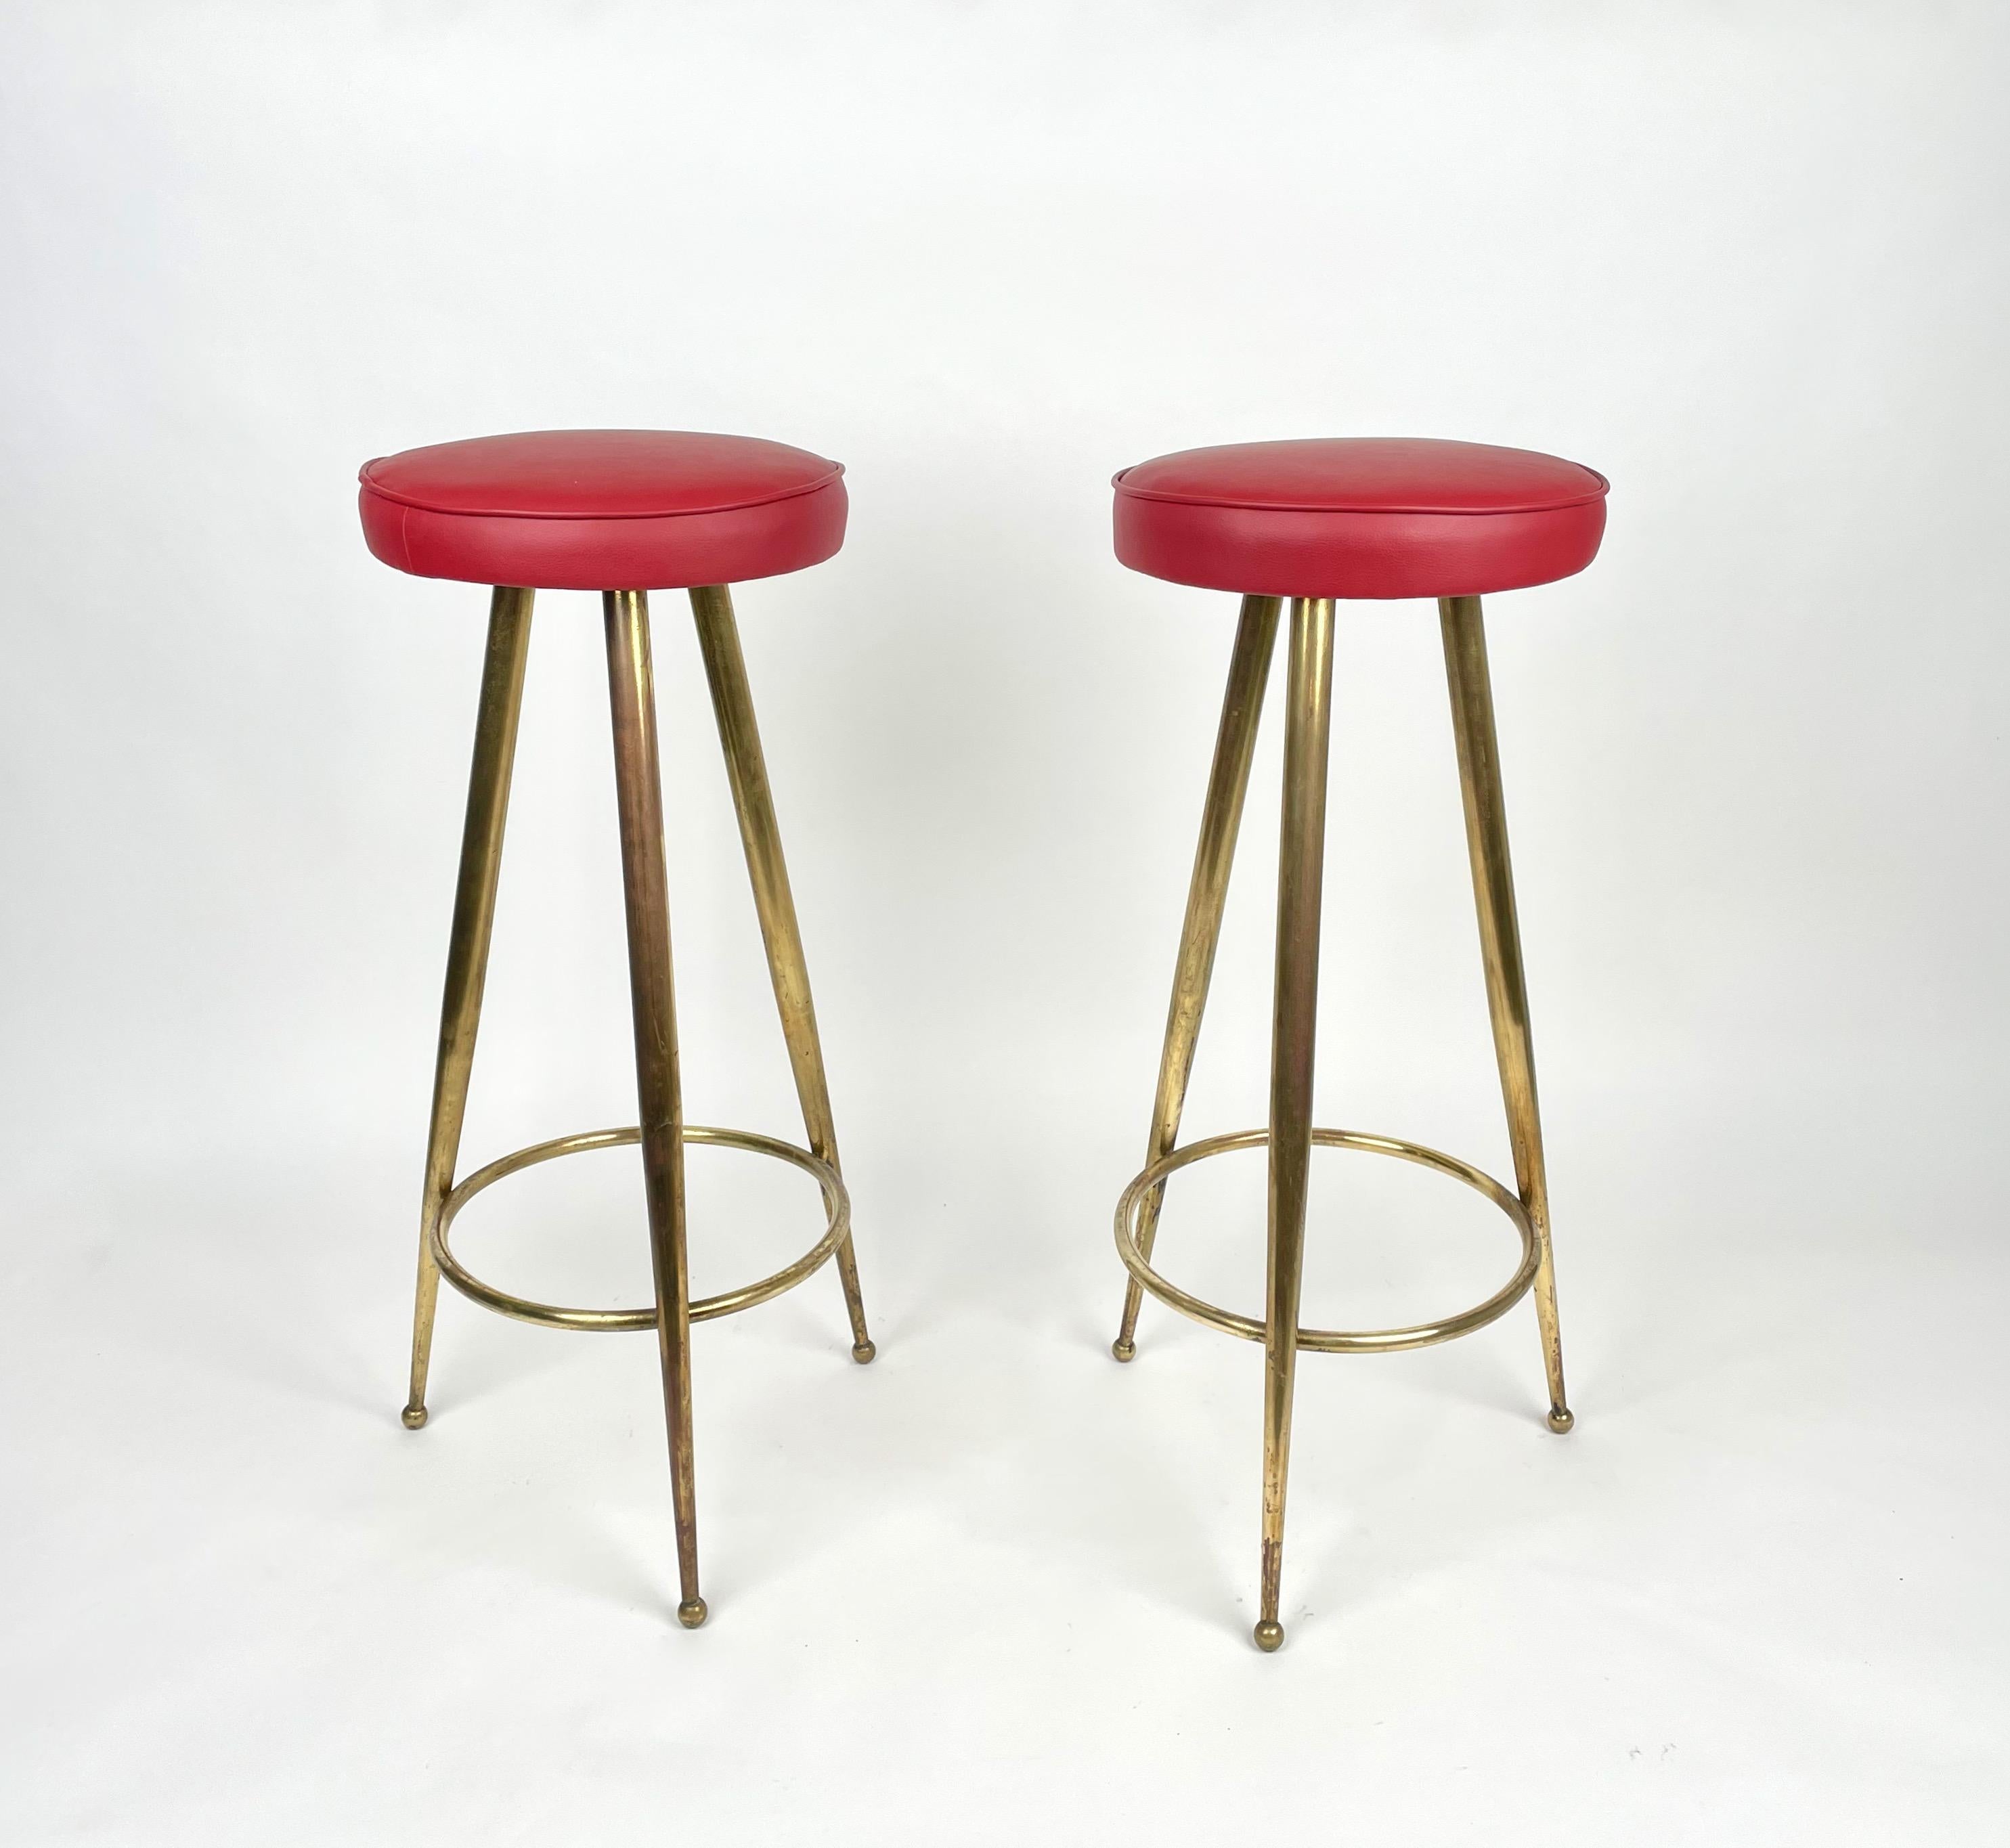 1950s bar stools